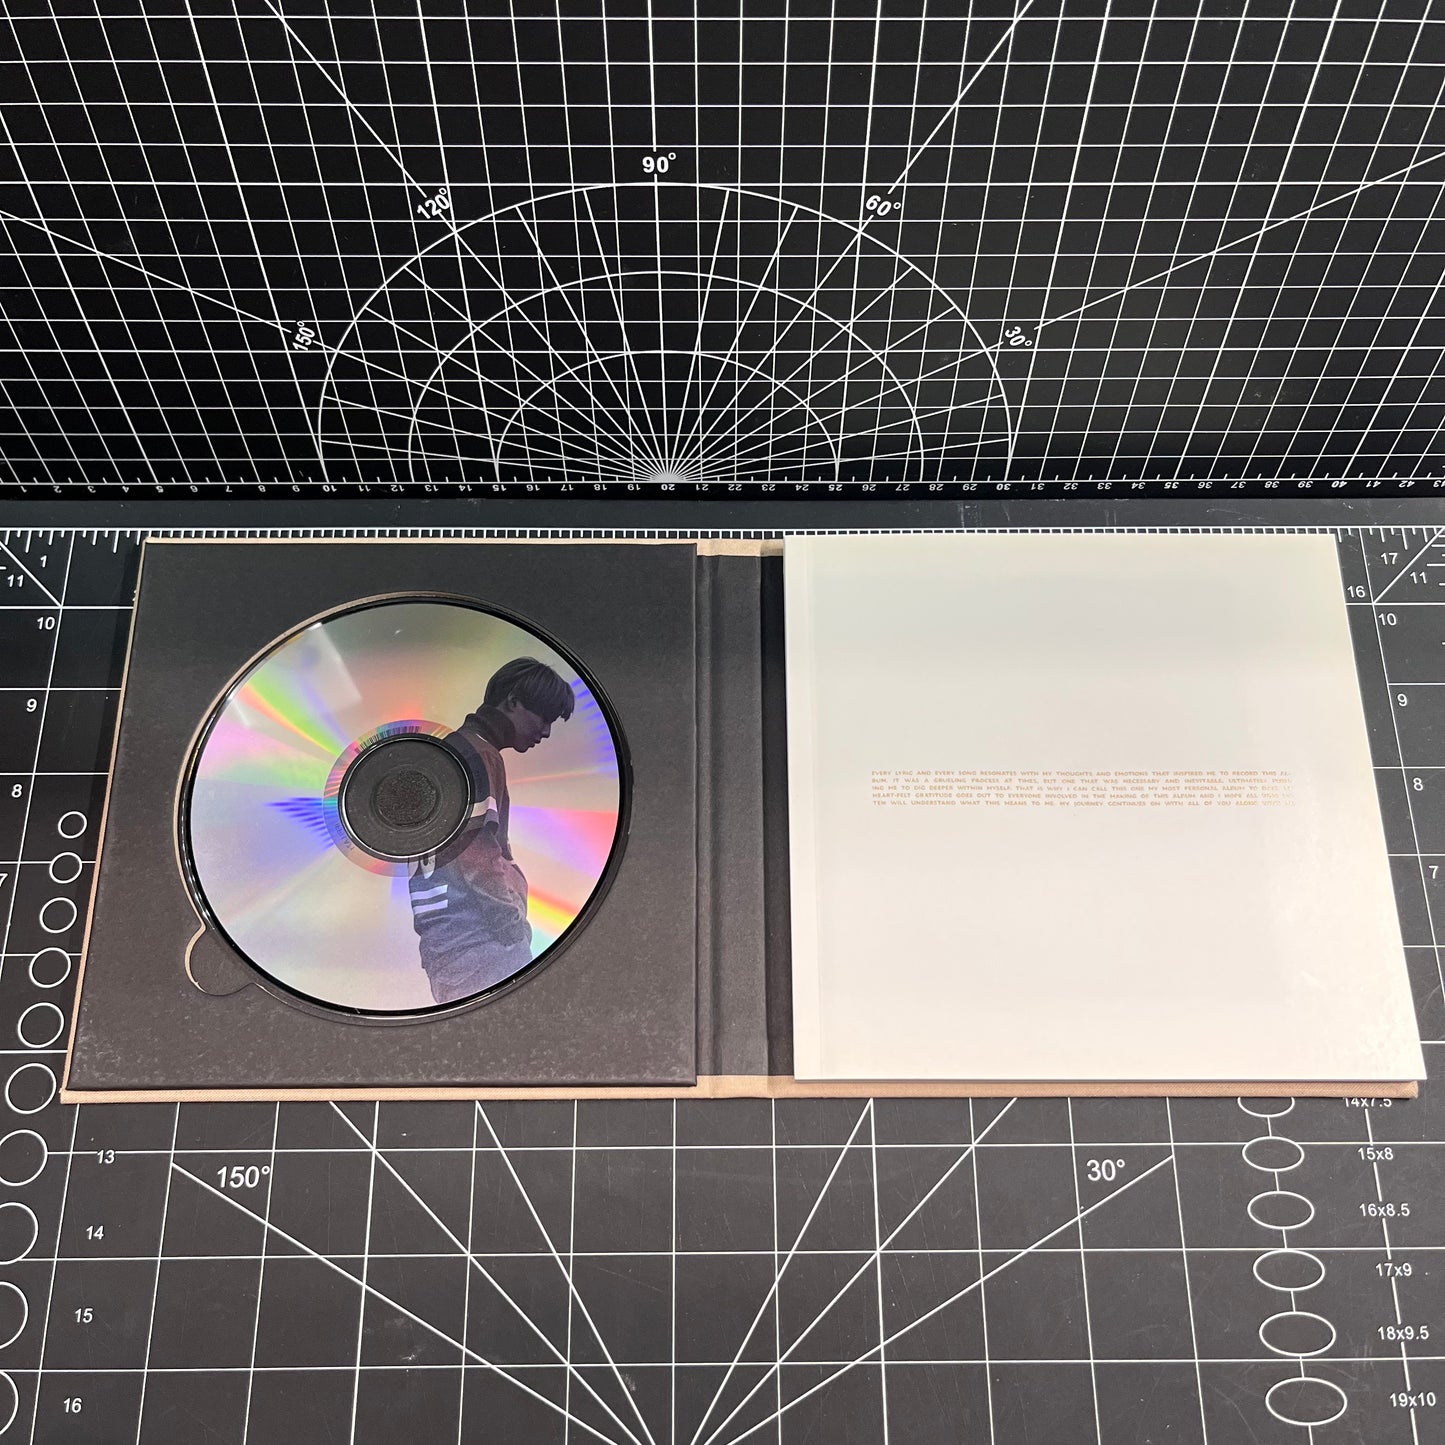 Taemin The 1st Album Press It (Version B) - No Photocard